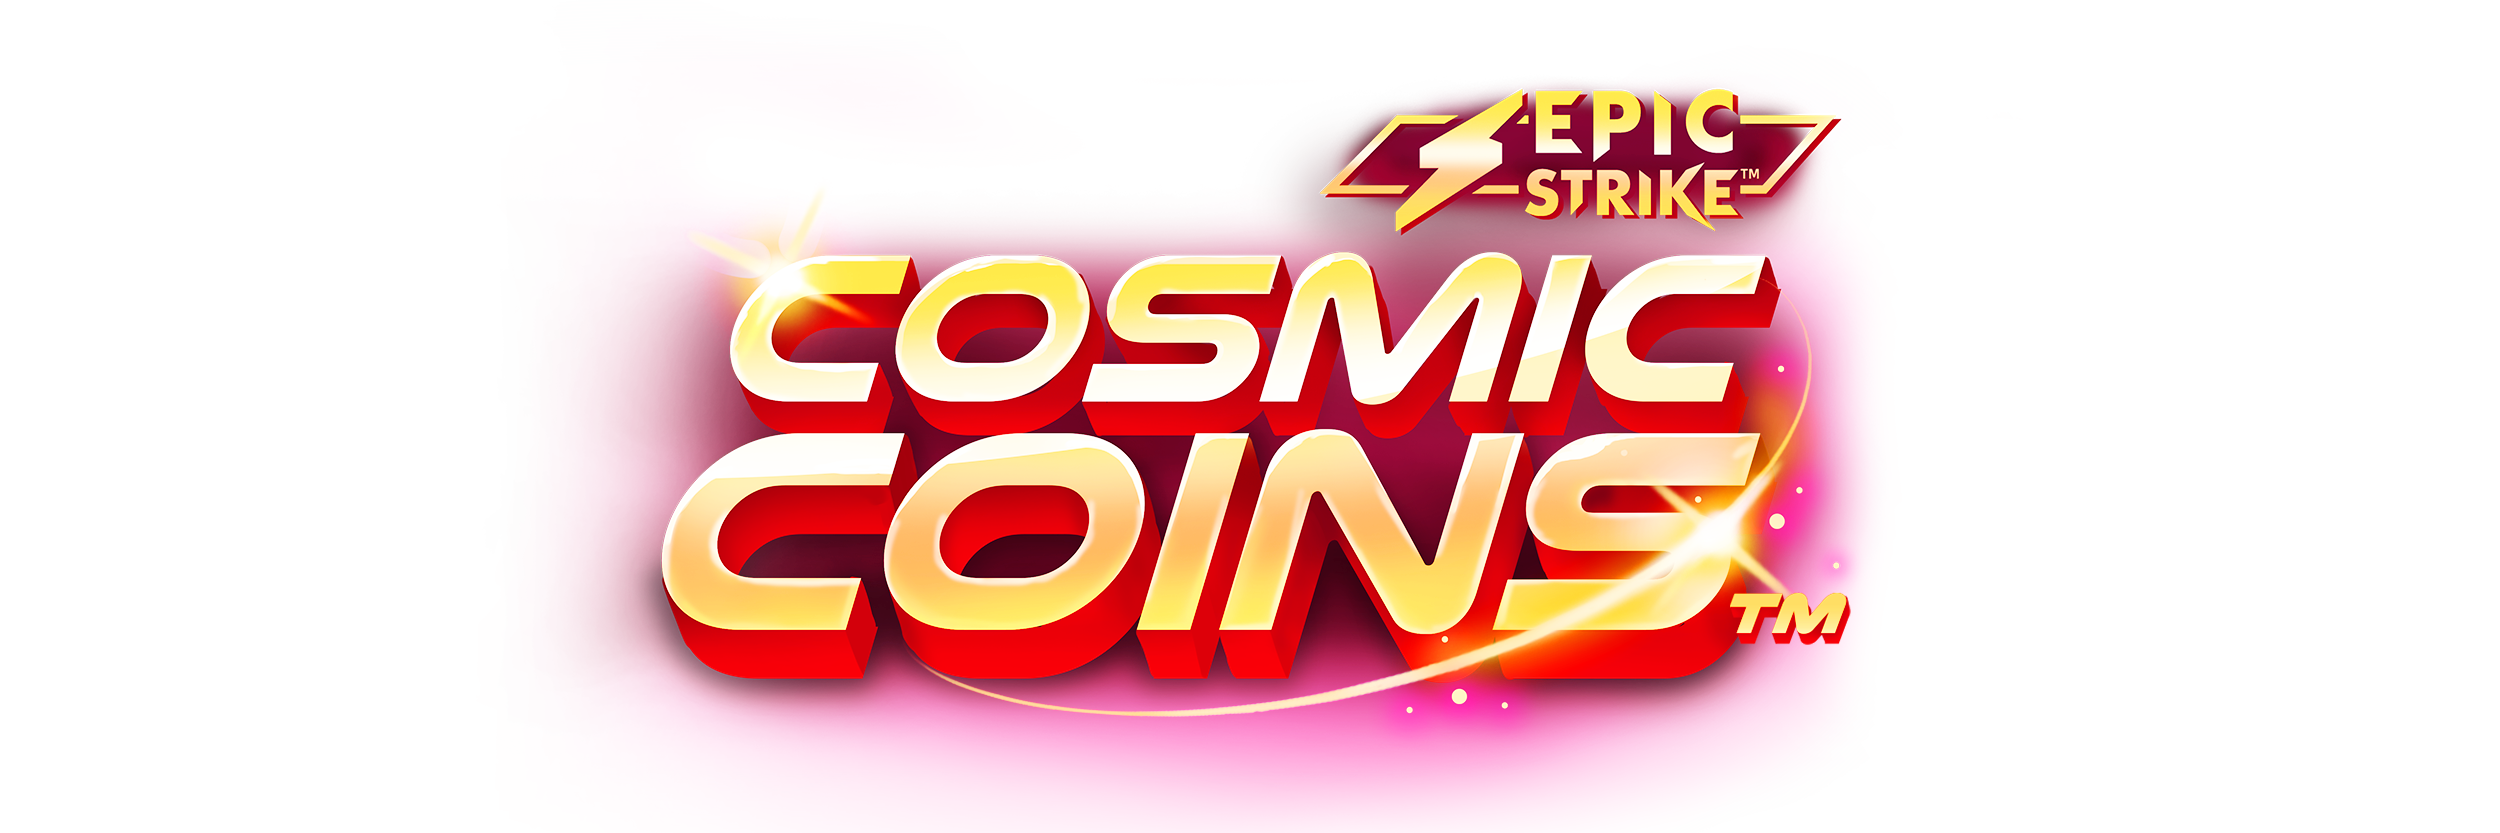 Cosmic coins slot logo